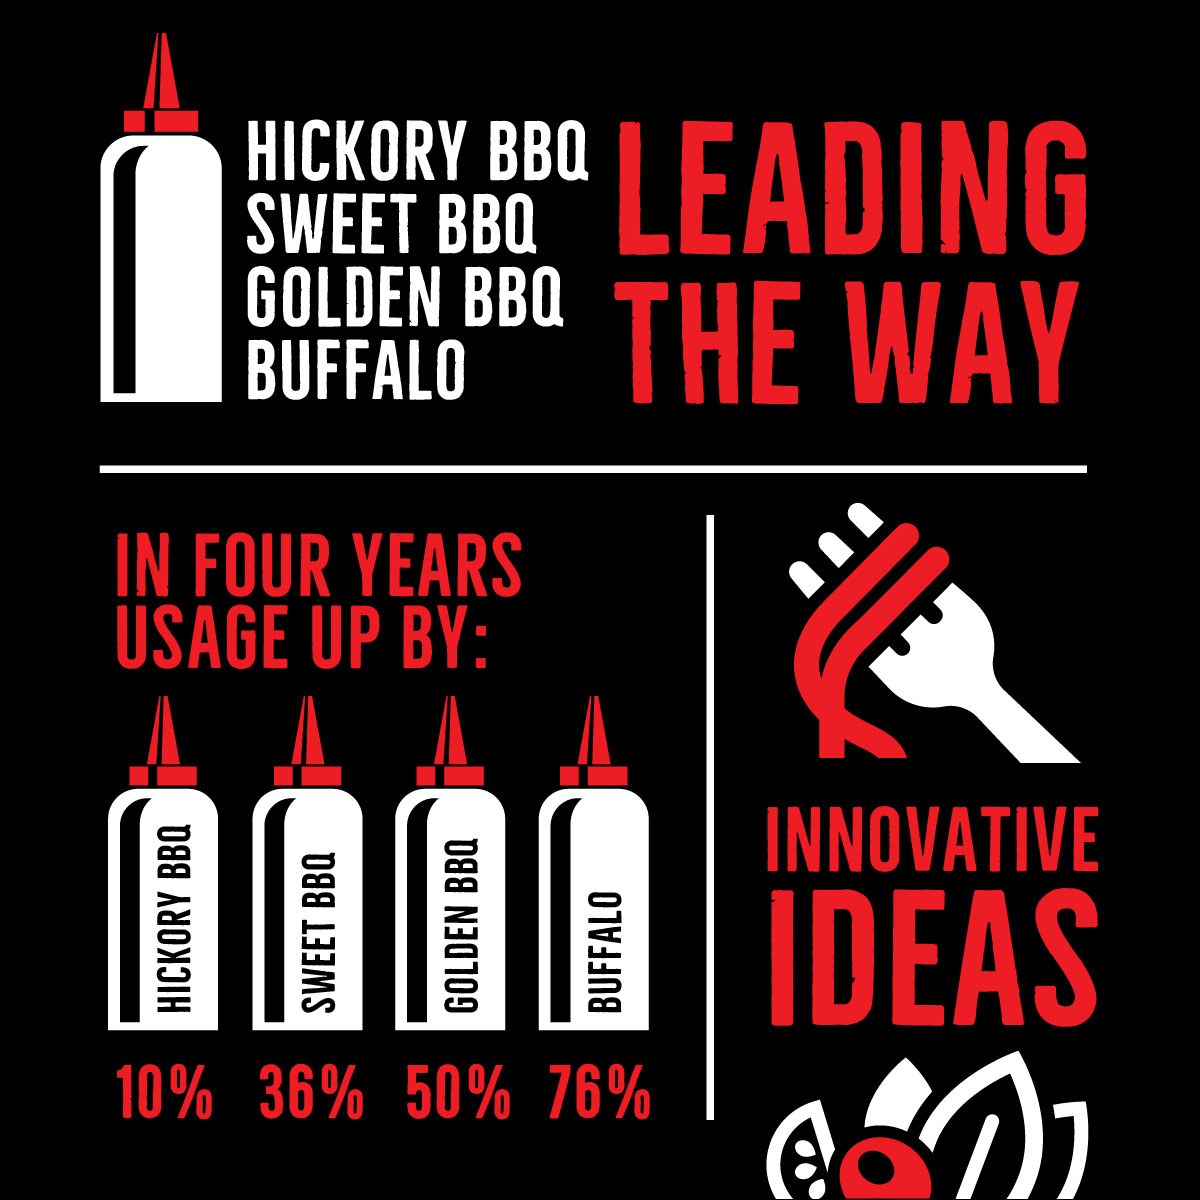 Innovative ideas for BBQ sauces